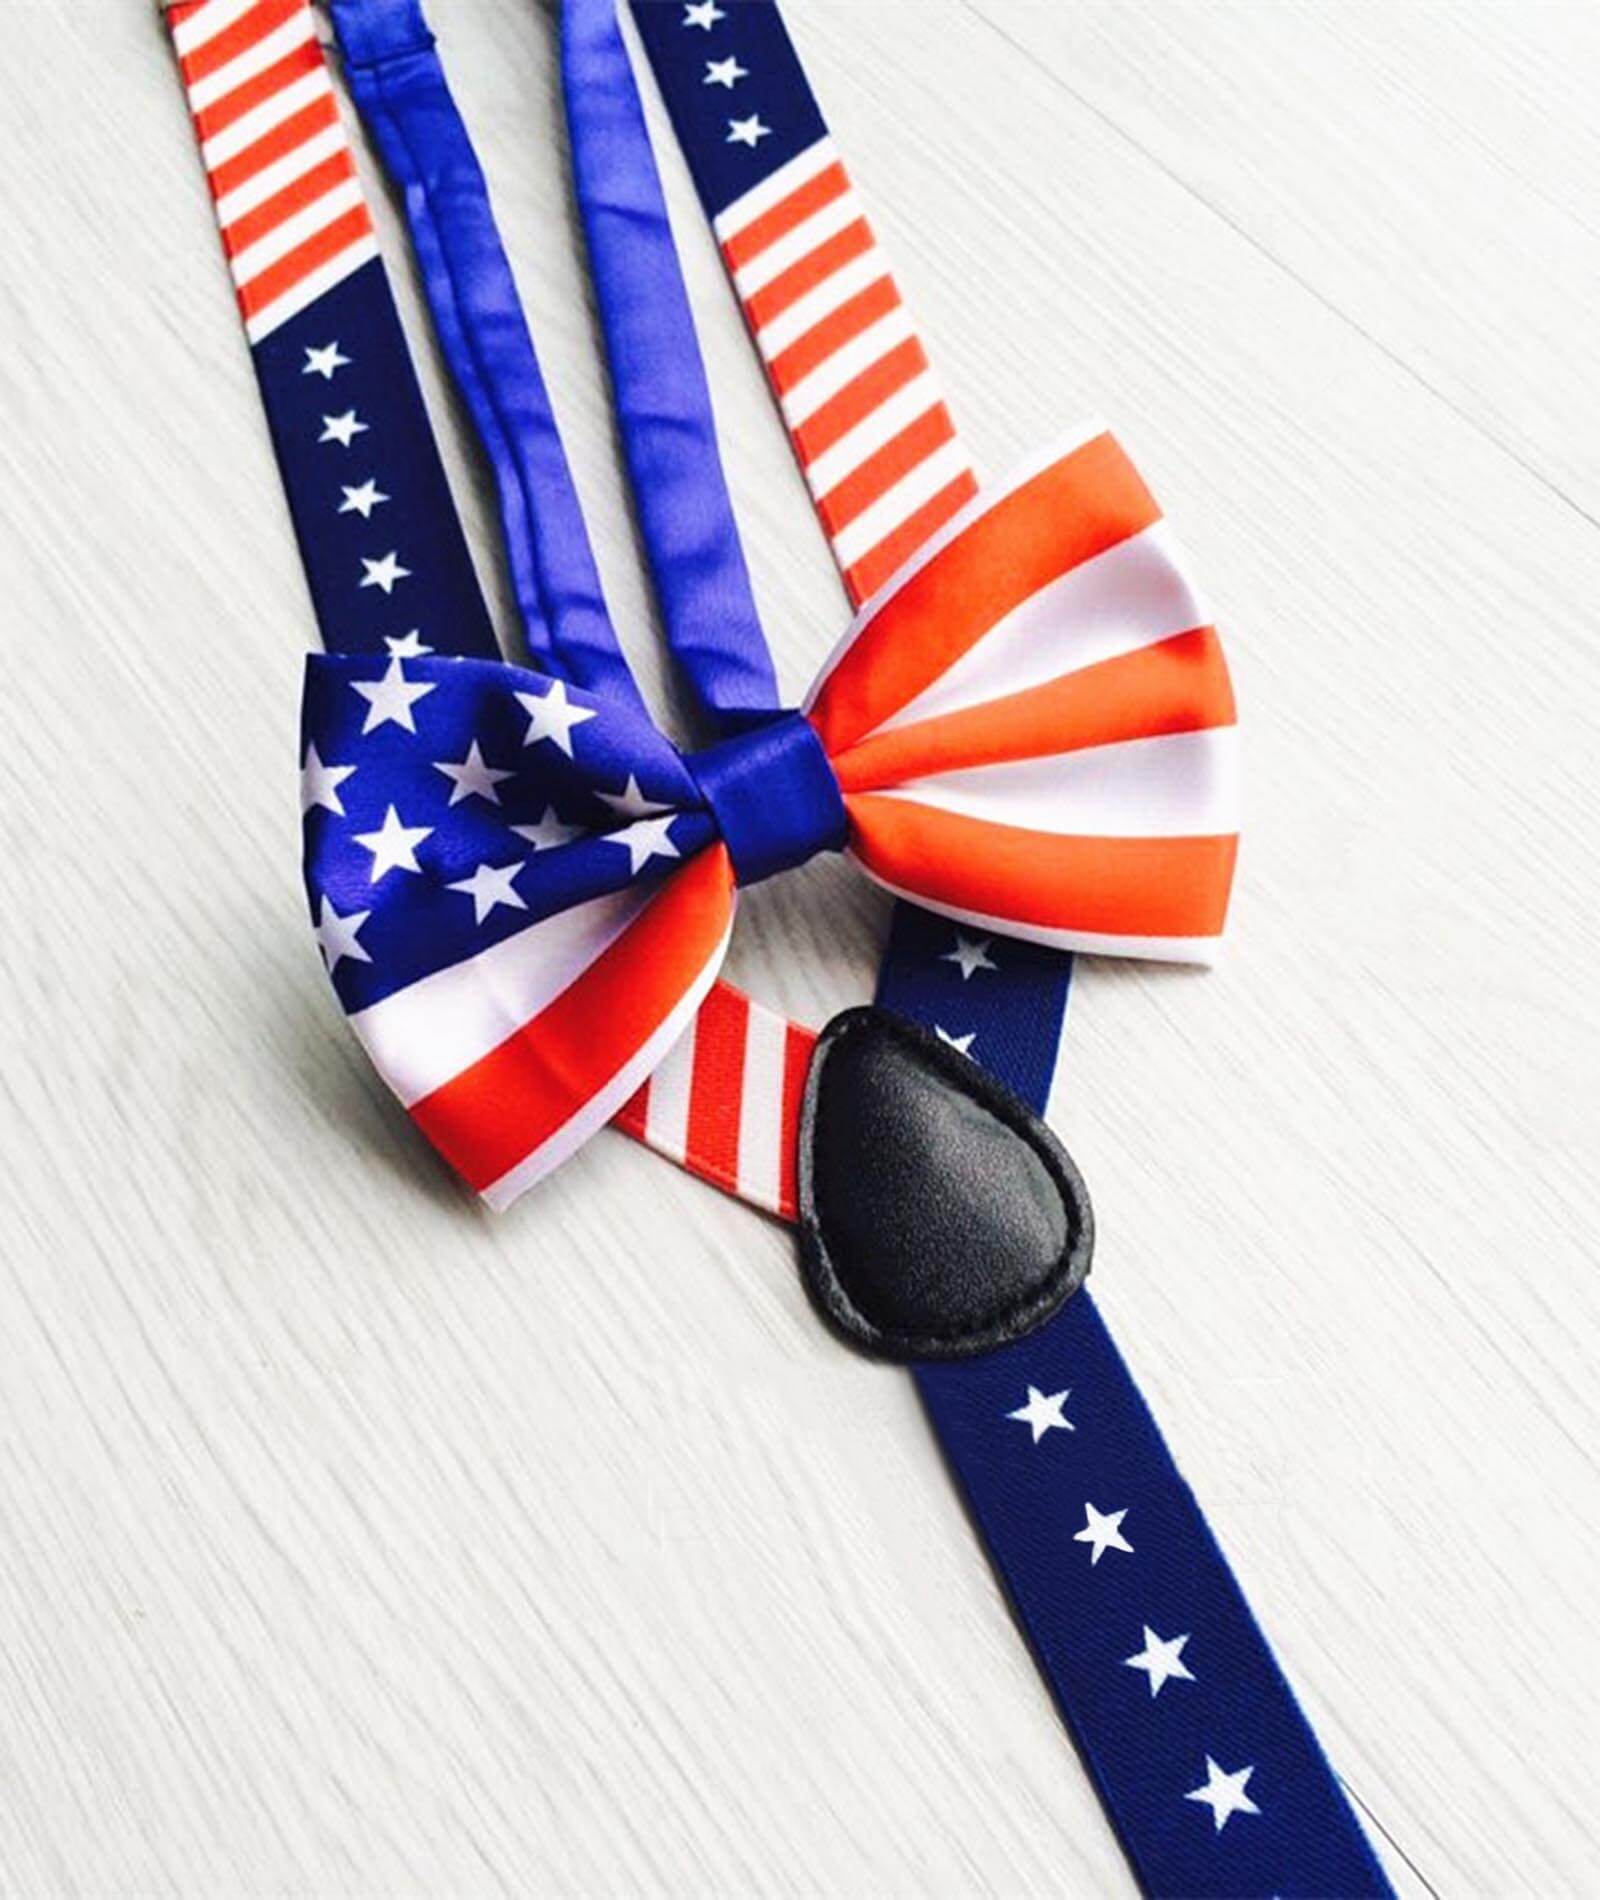  Men's PATRIOTIC USA Flag 2 in 1 Suspenders and Bow Tie Adjustable Elastic X Band Suspenders & Bowtie Set